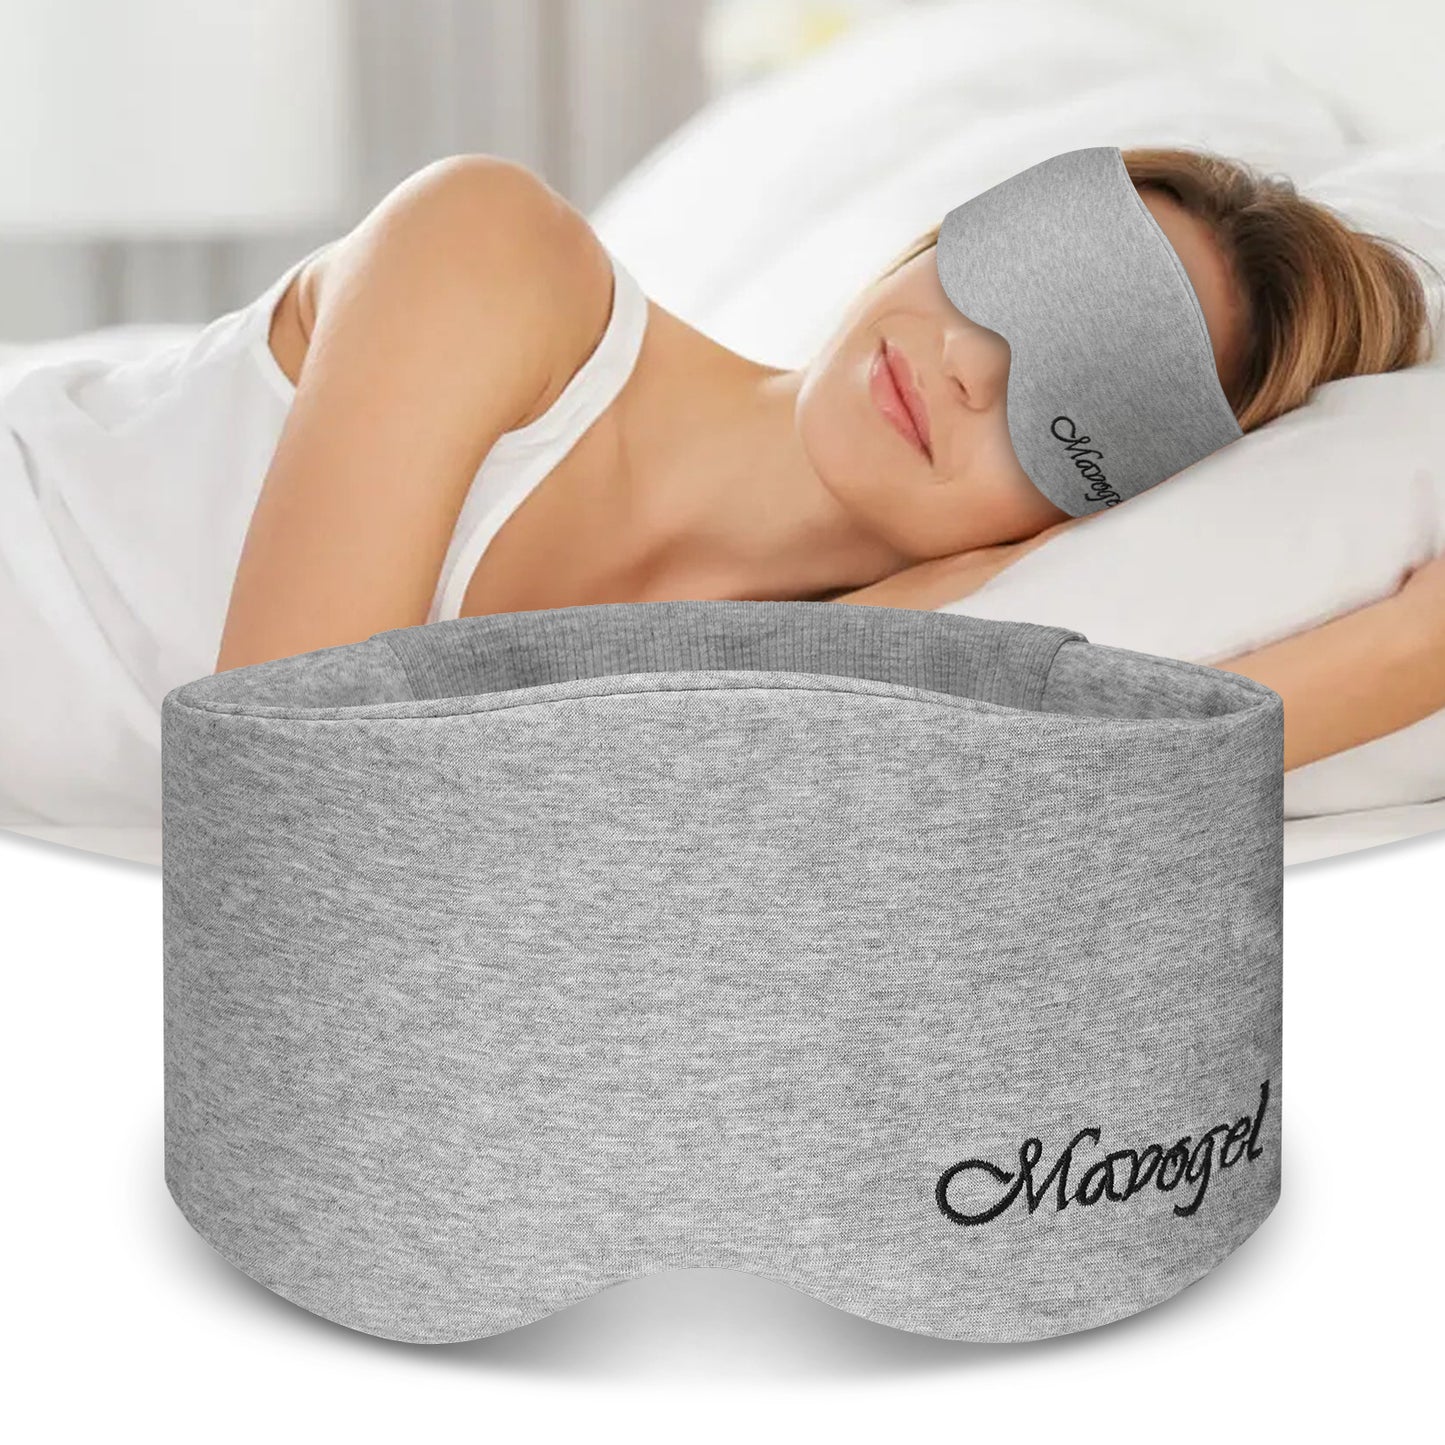 Mavogel Cotton Sleep Mask - Comfortable & Breathable Eye Mask for Sleeping Adjustable Full Eye Cover with Elastic Strap